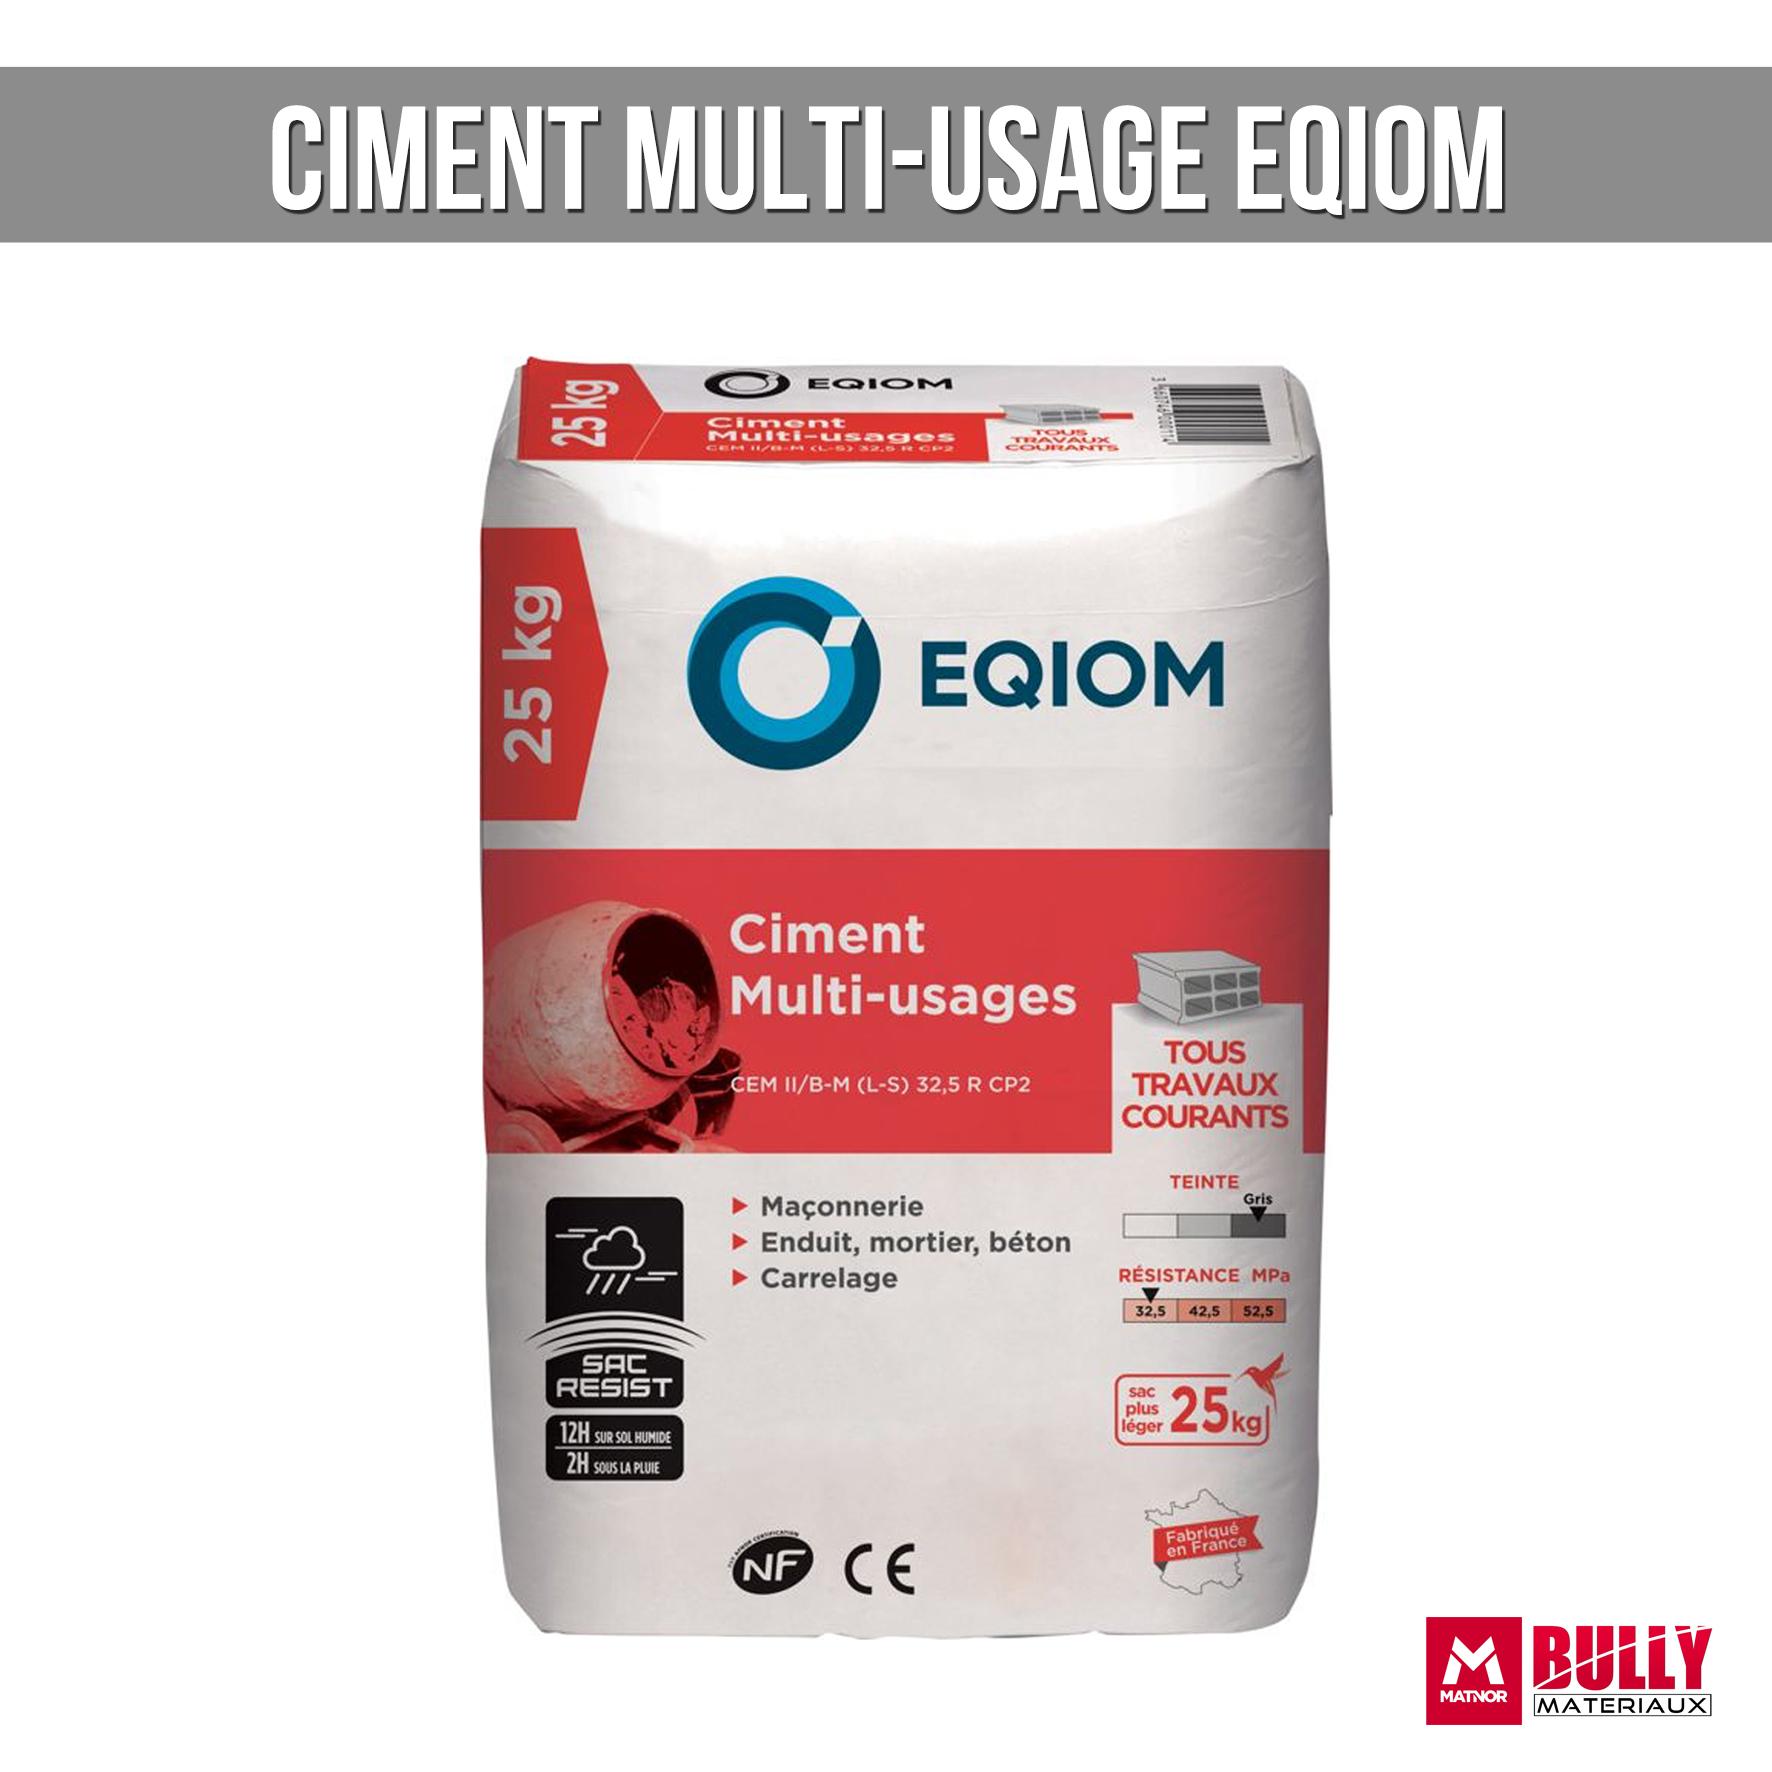 Ciment multi usage eqiom